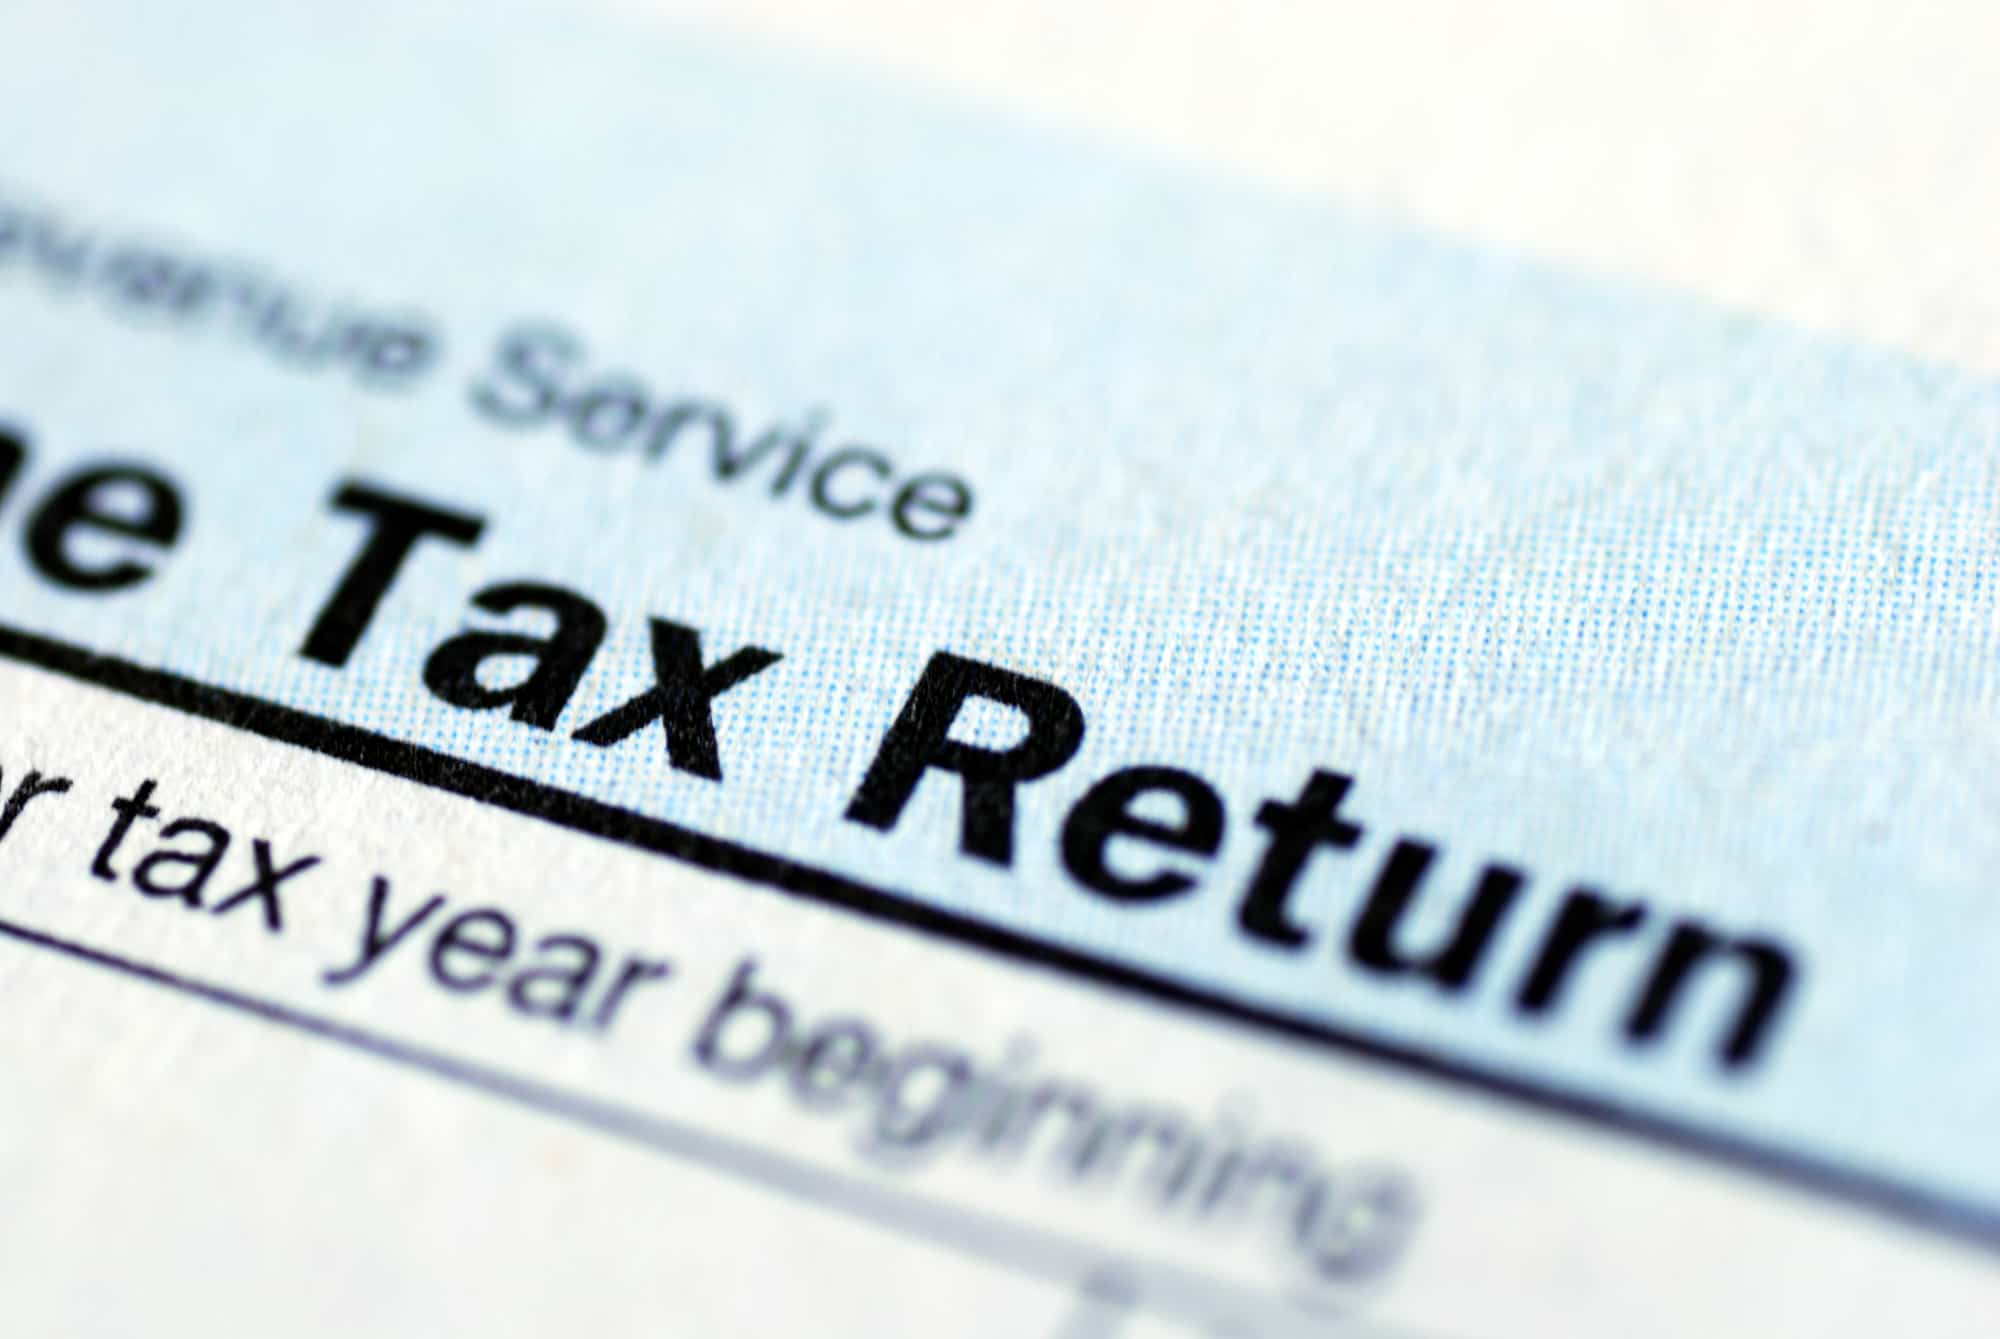 Late Filing of VAT Return in UAE